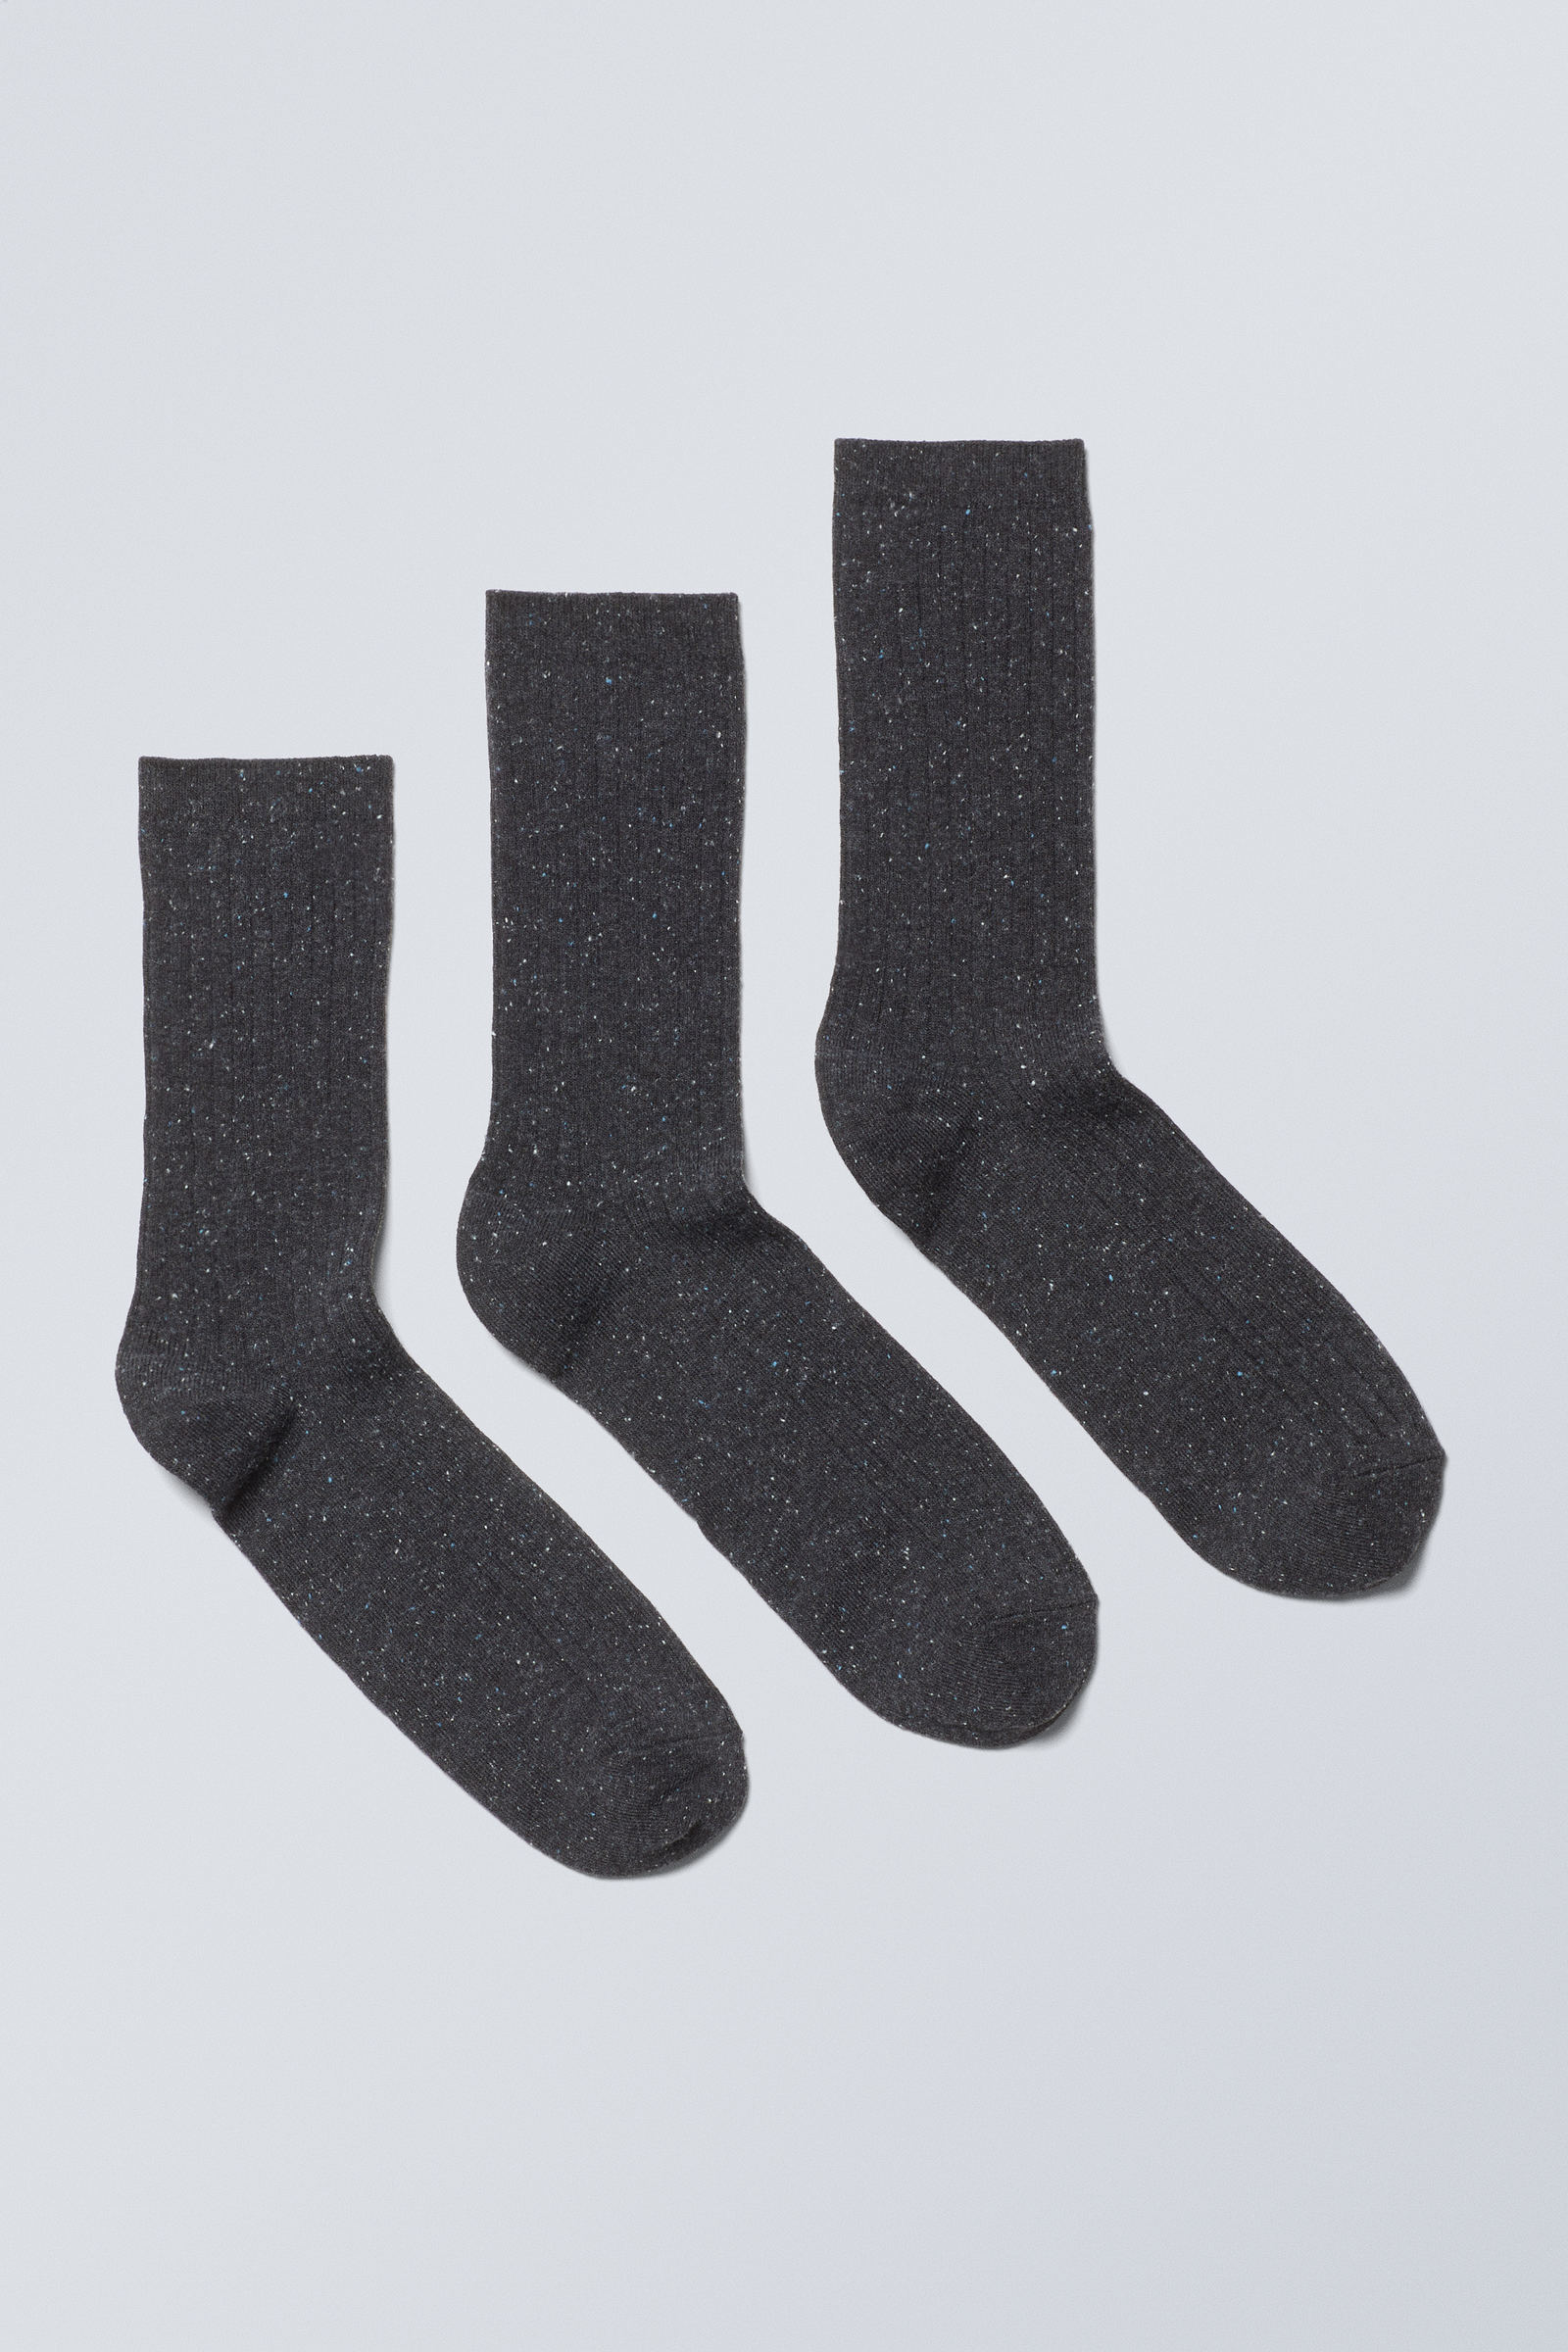 #272628 - 3-pack Rib Neps Socks